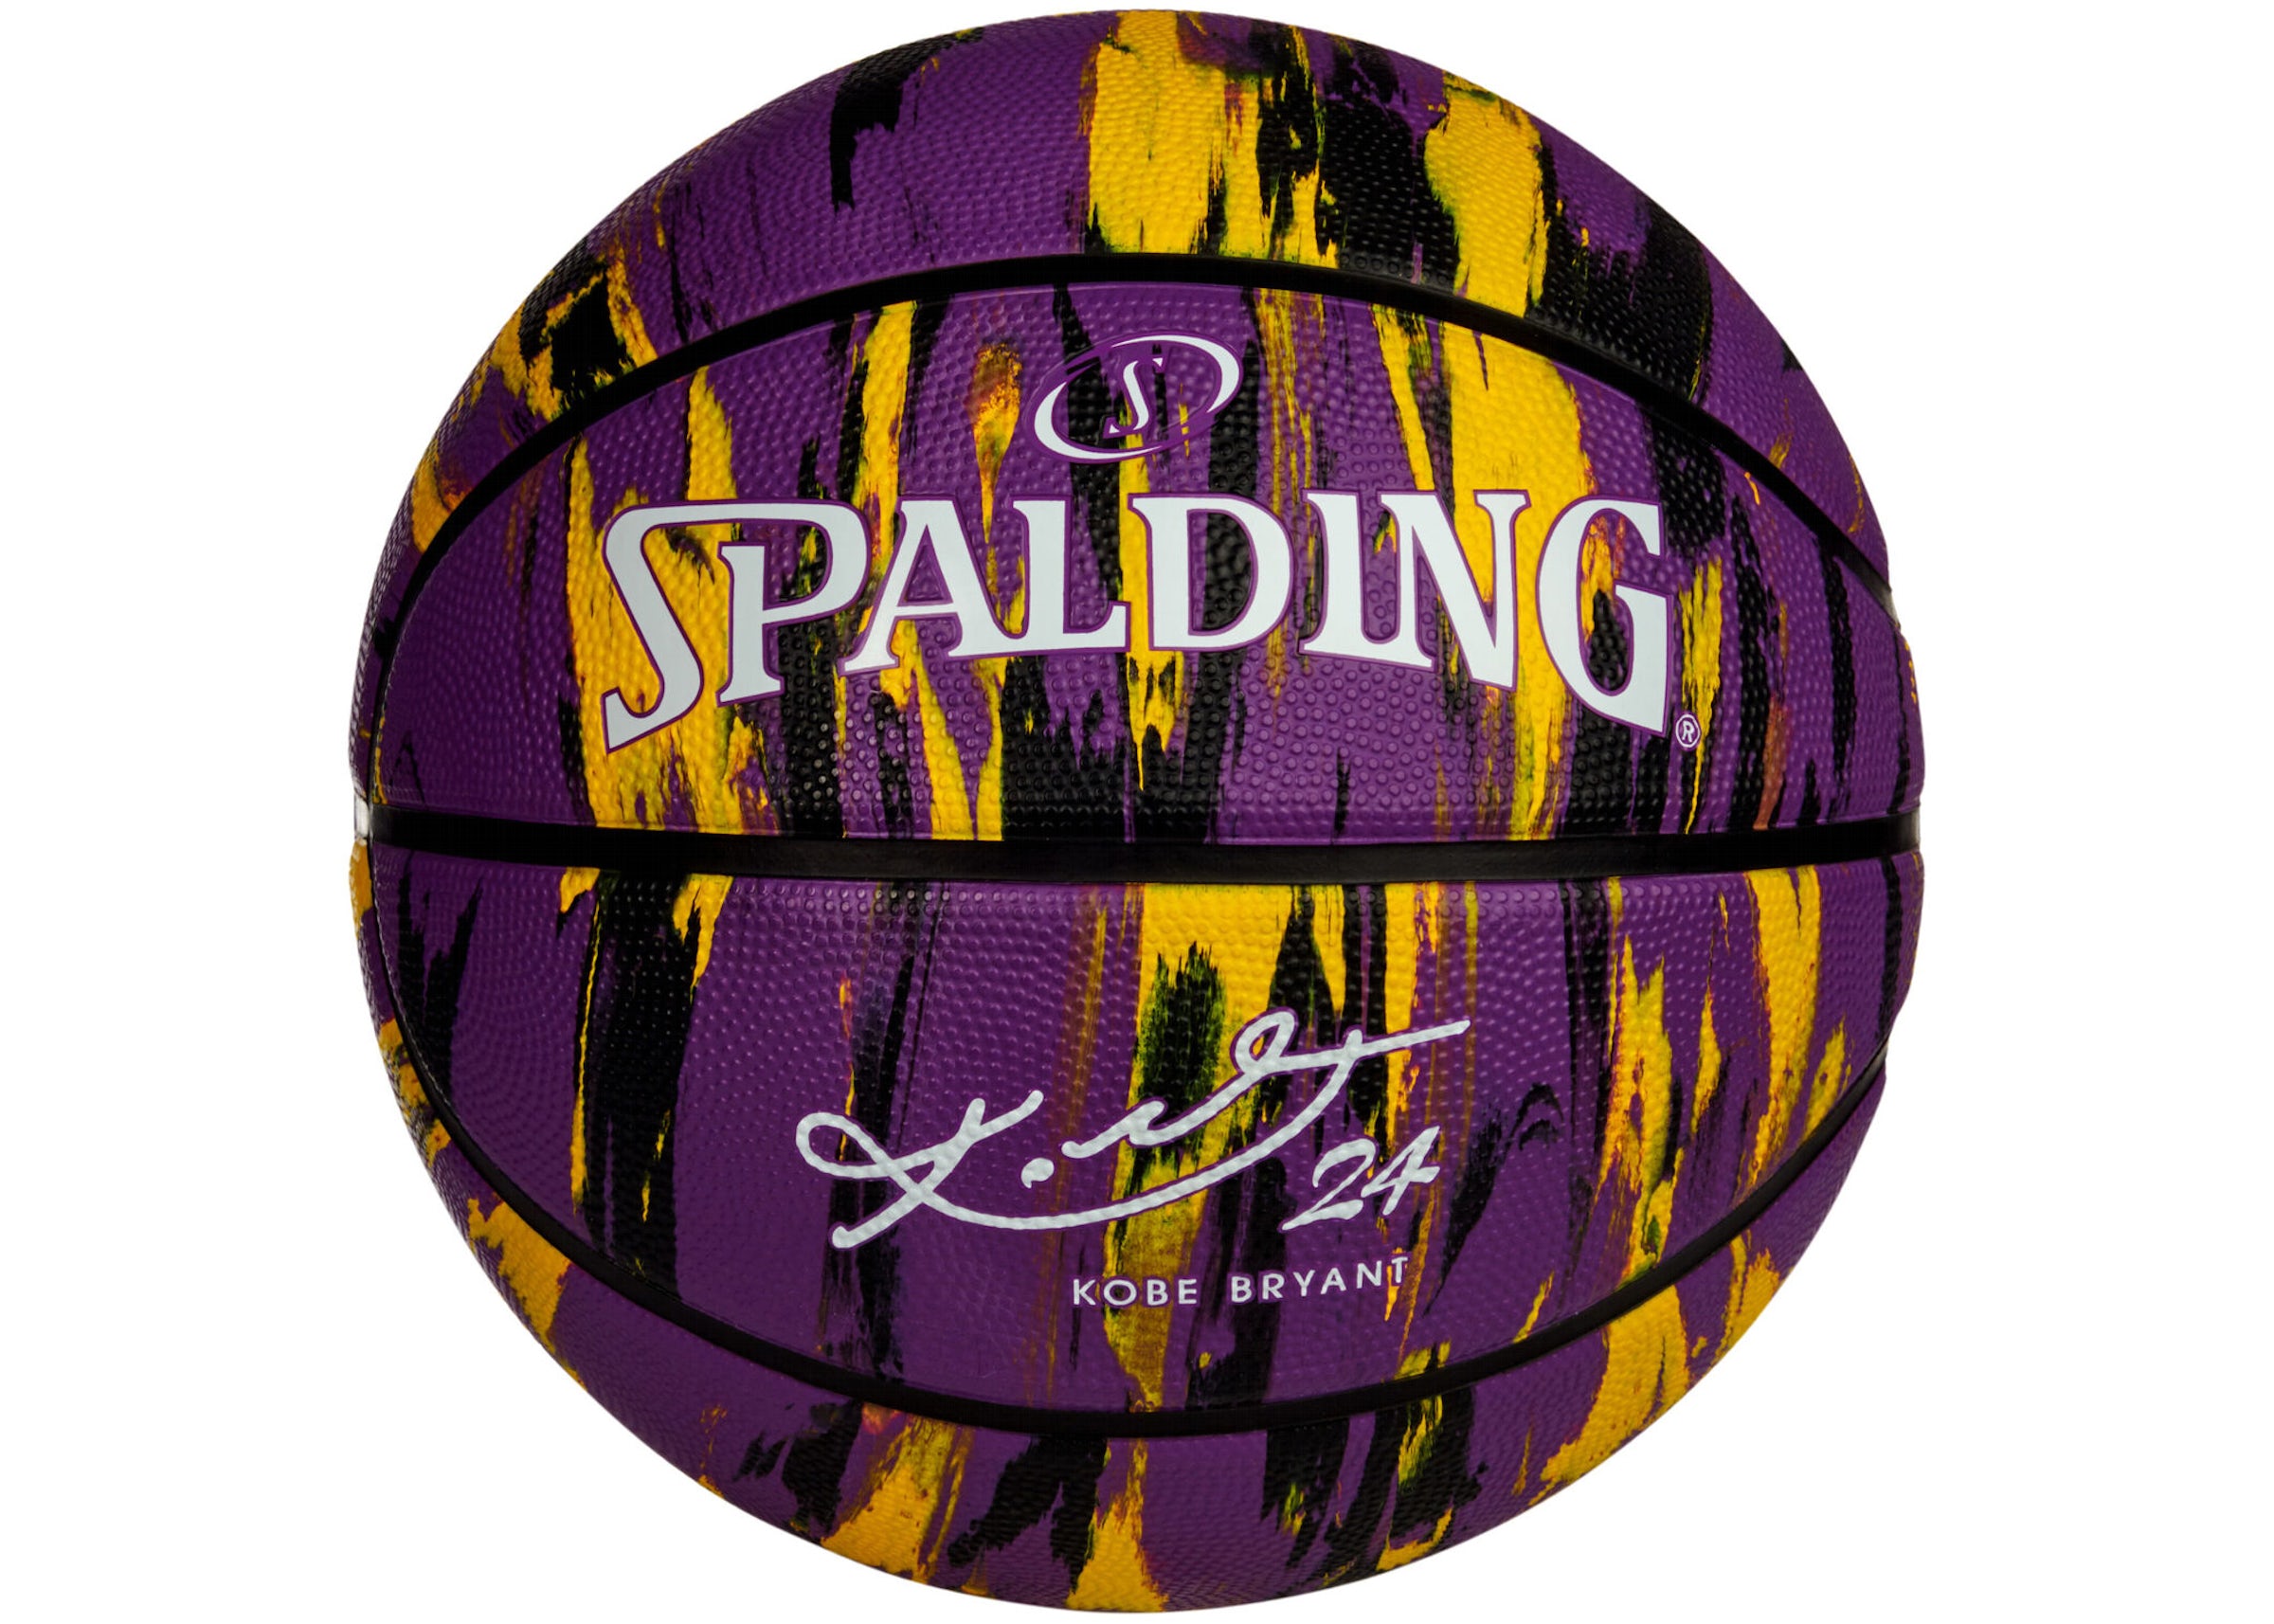 Spalding x Kobe Bryant Marble Series Basketball Purple/Yellow - US